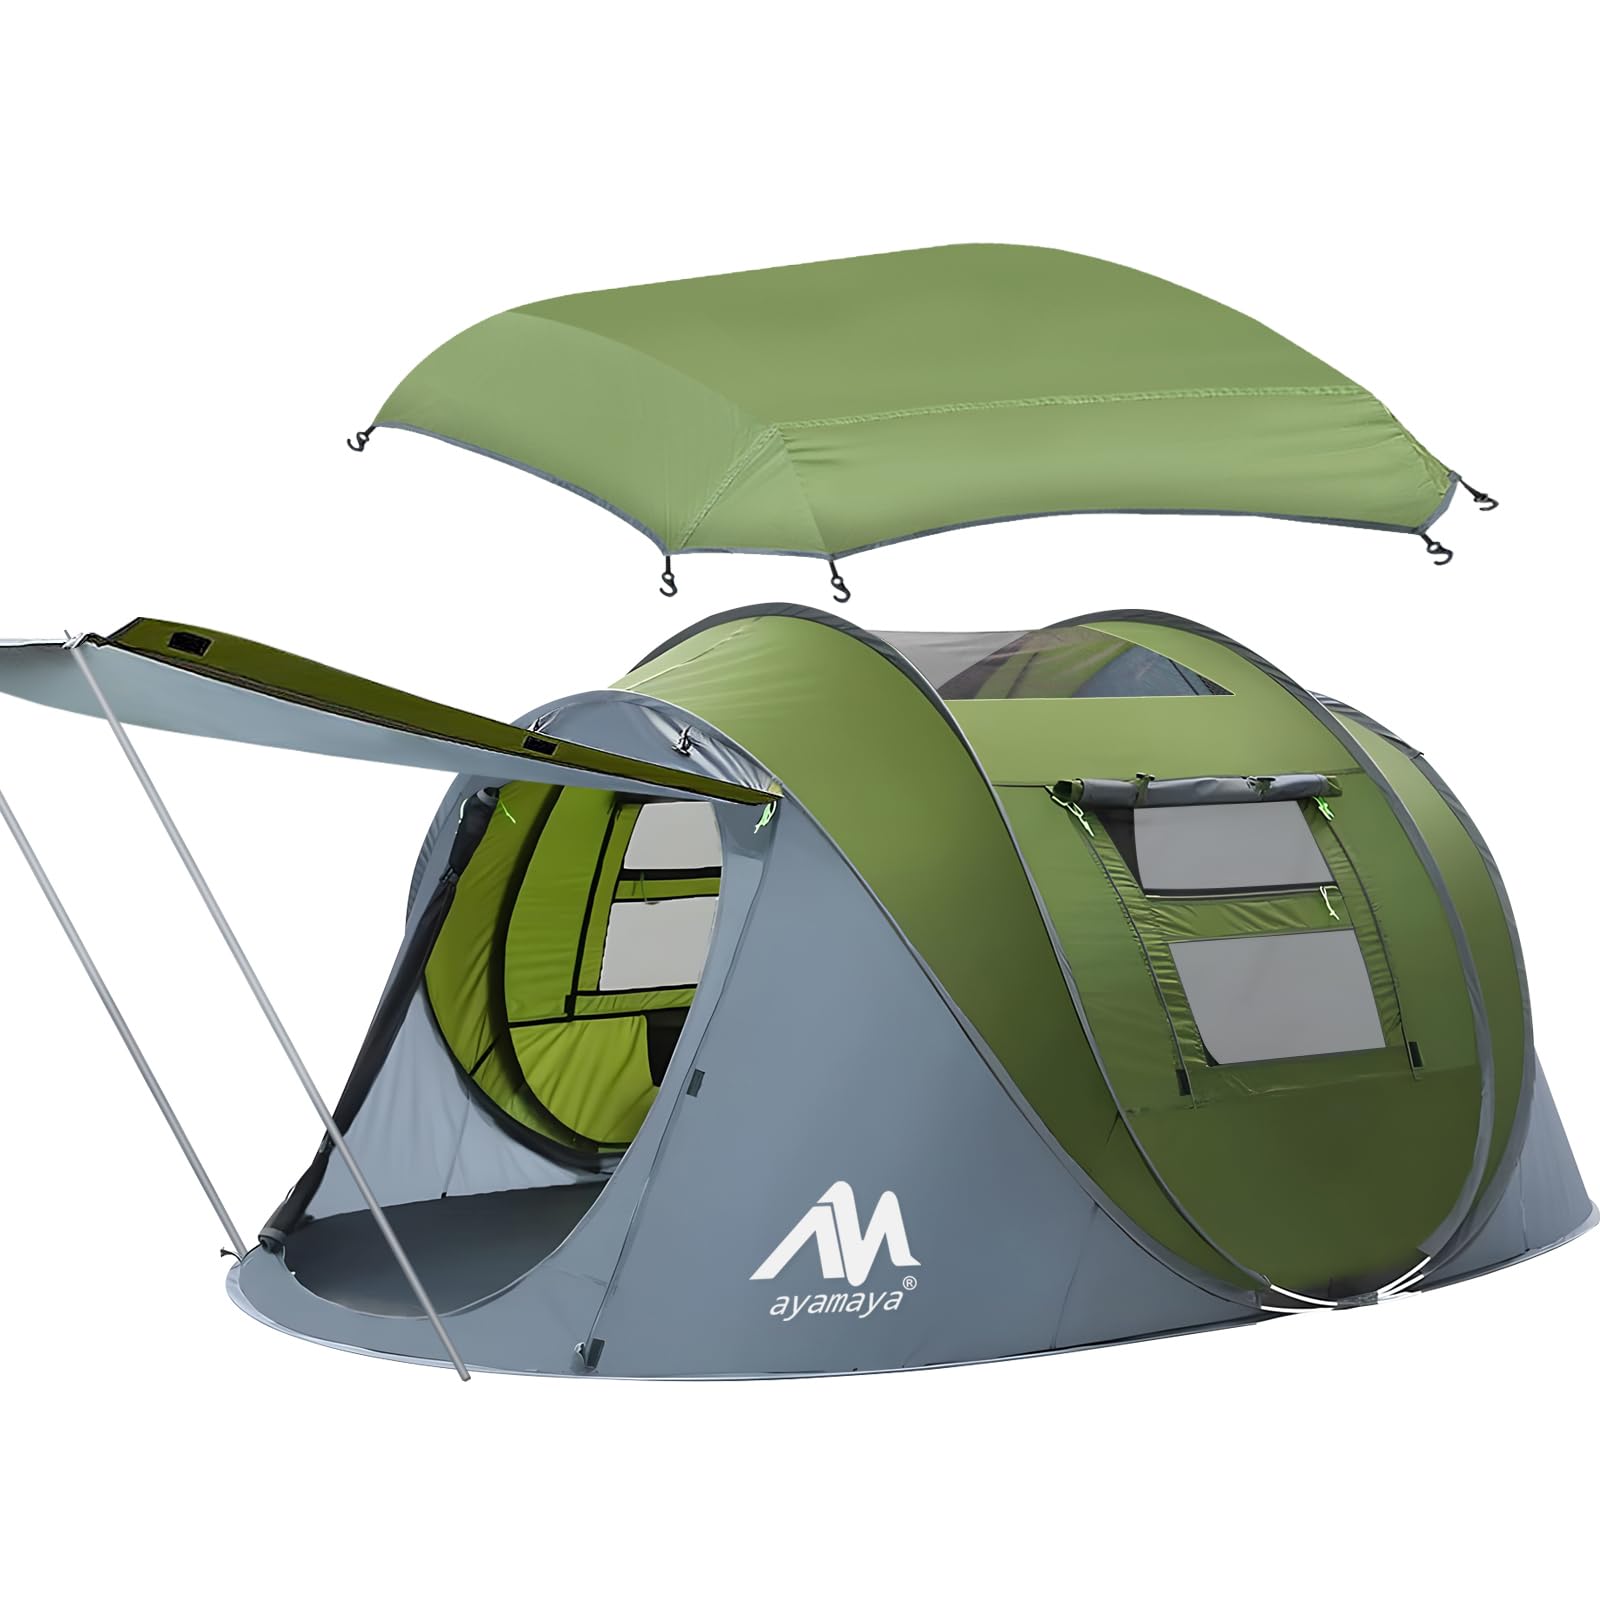 AYAMAYA 4 Person Pop Up Tents for Camping